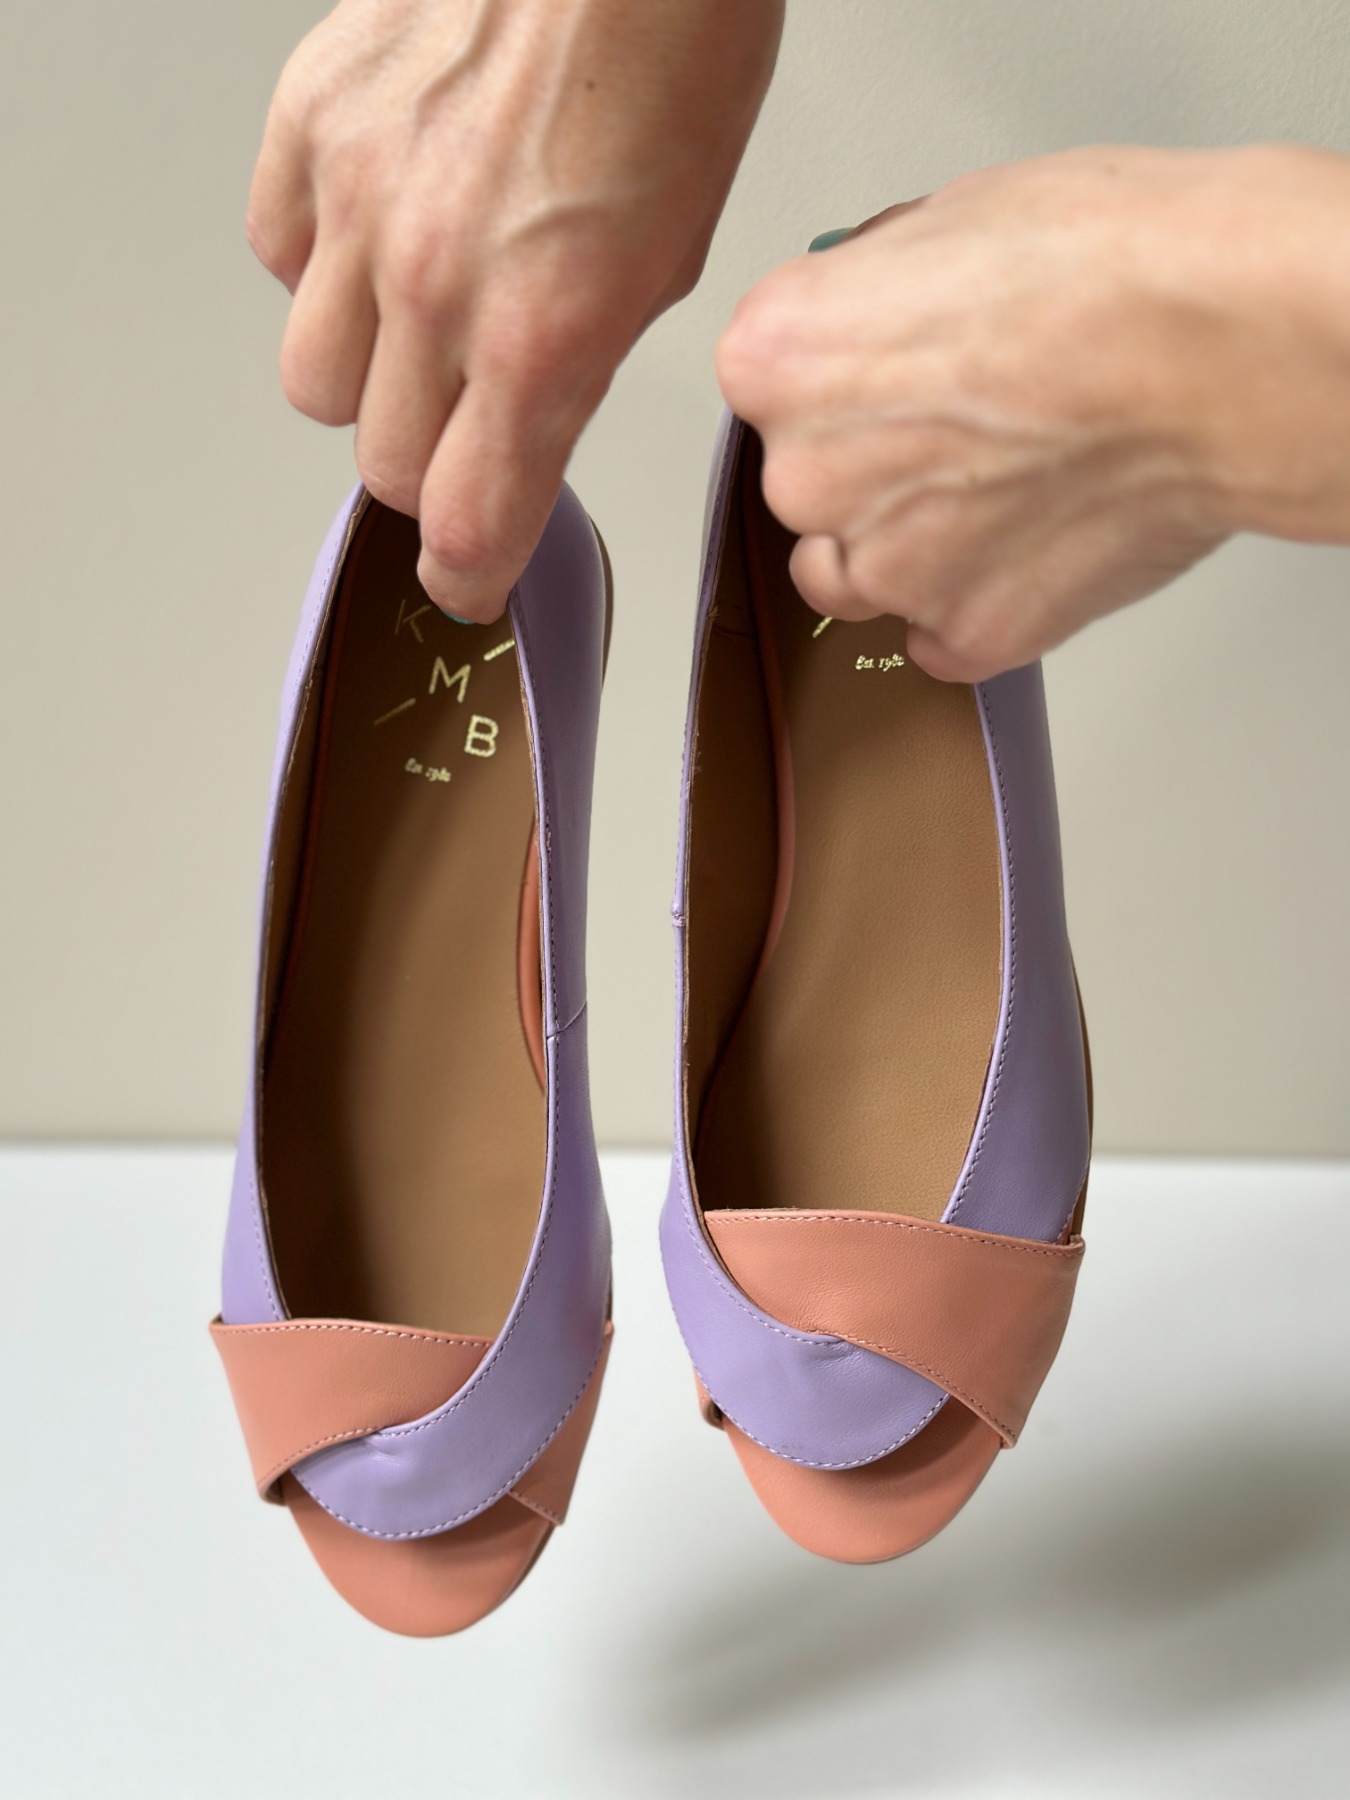 KMB Shoes - Ballerina SOFIE - Apricot/Lila 7